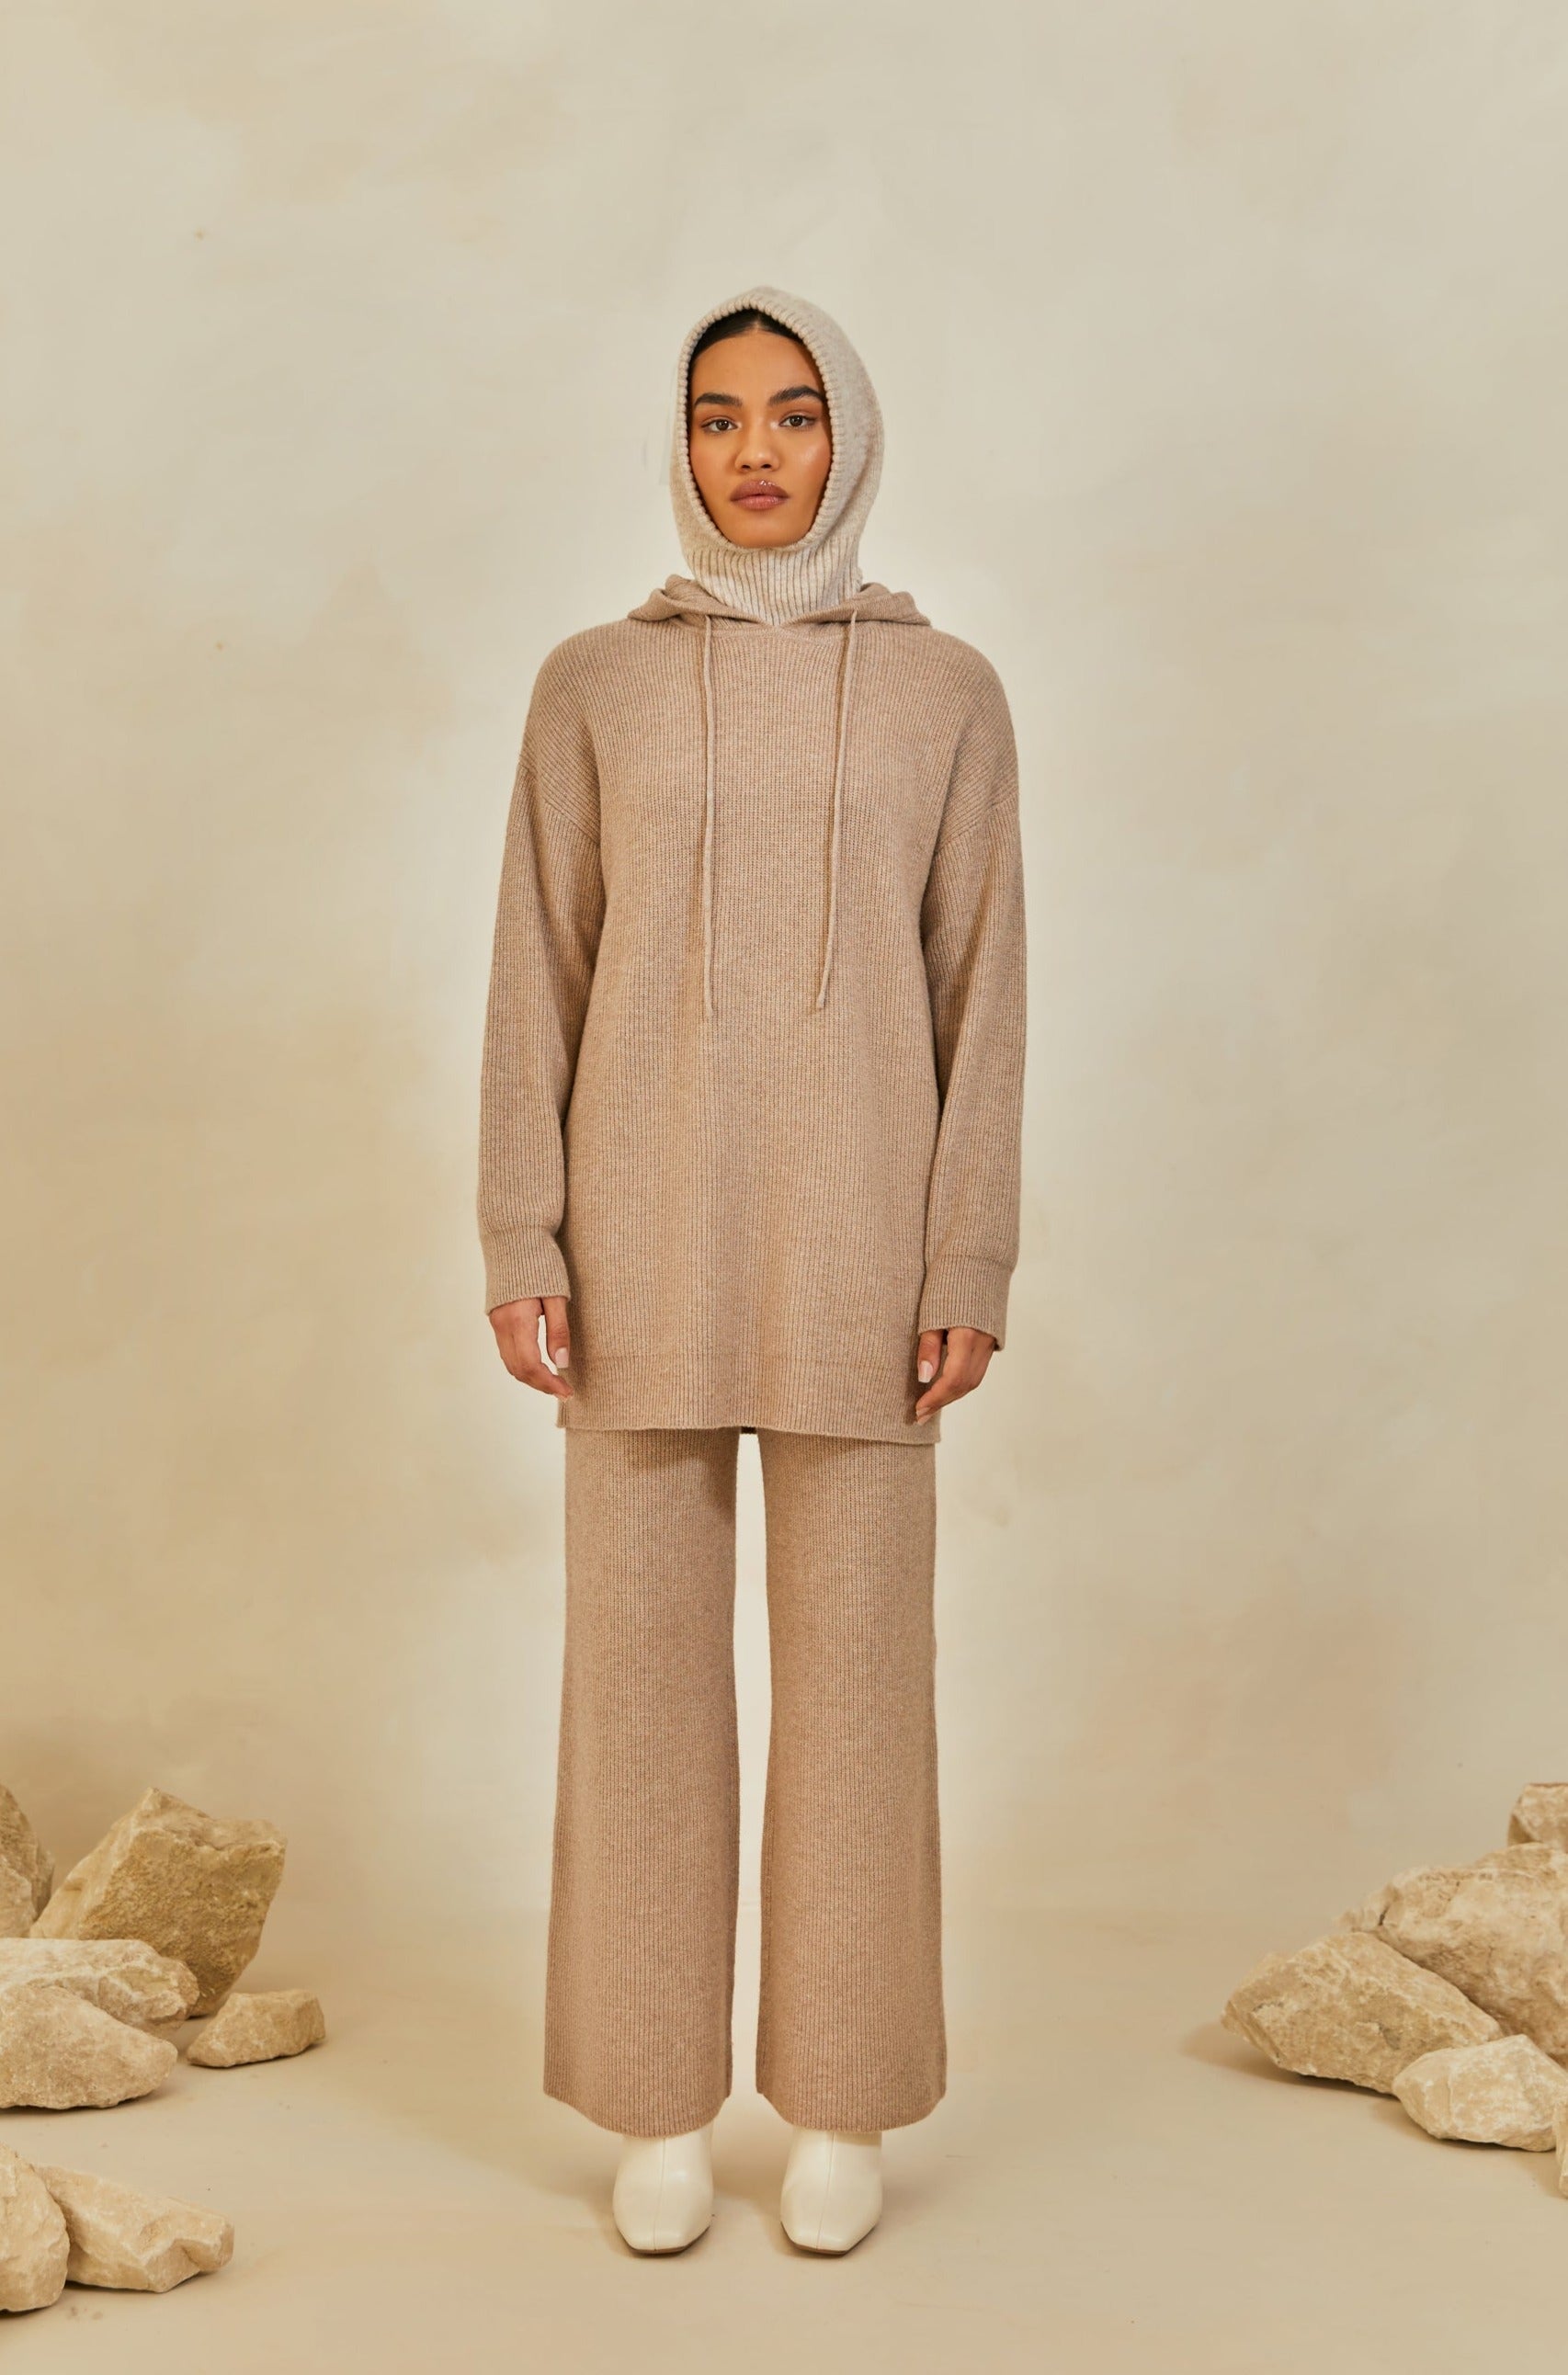 Wool Knit Wide Leg Pants - Cobblestone Veiled 